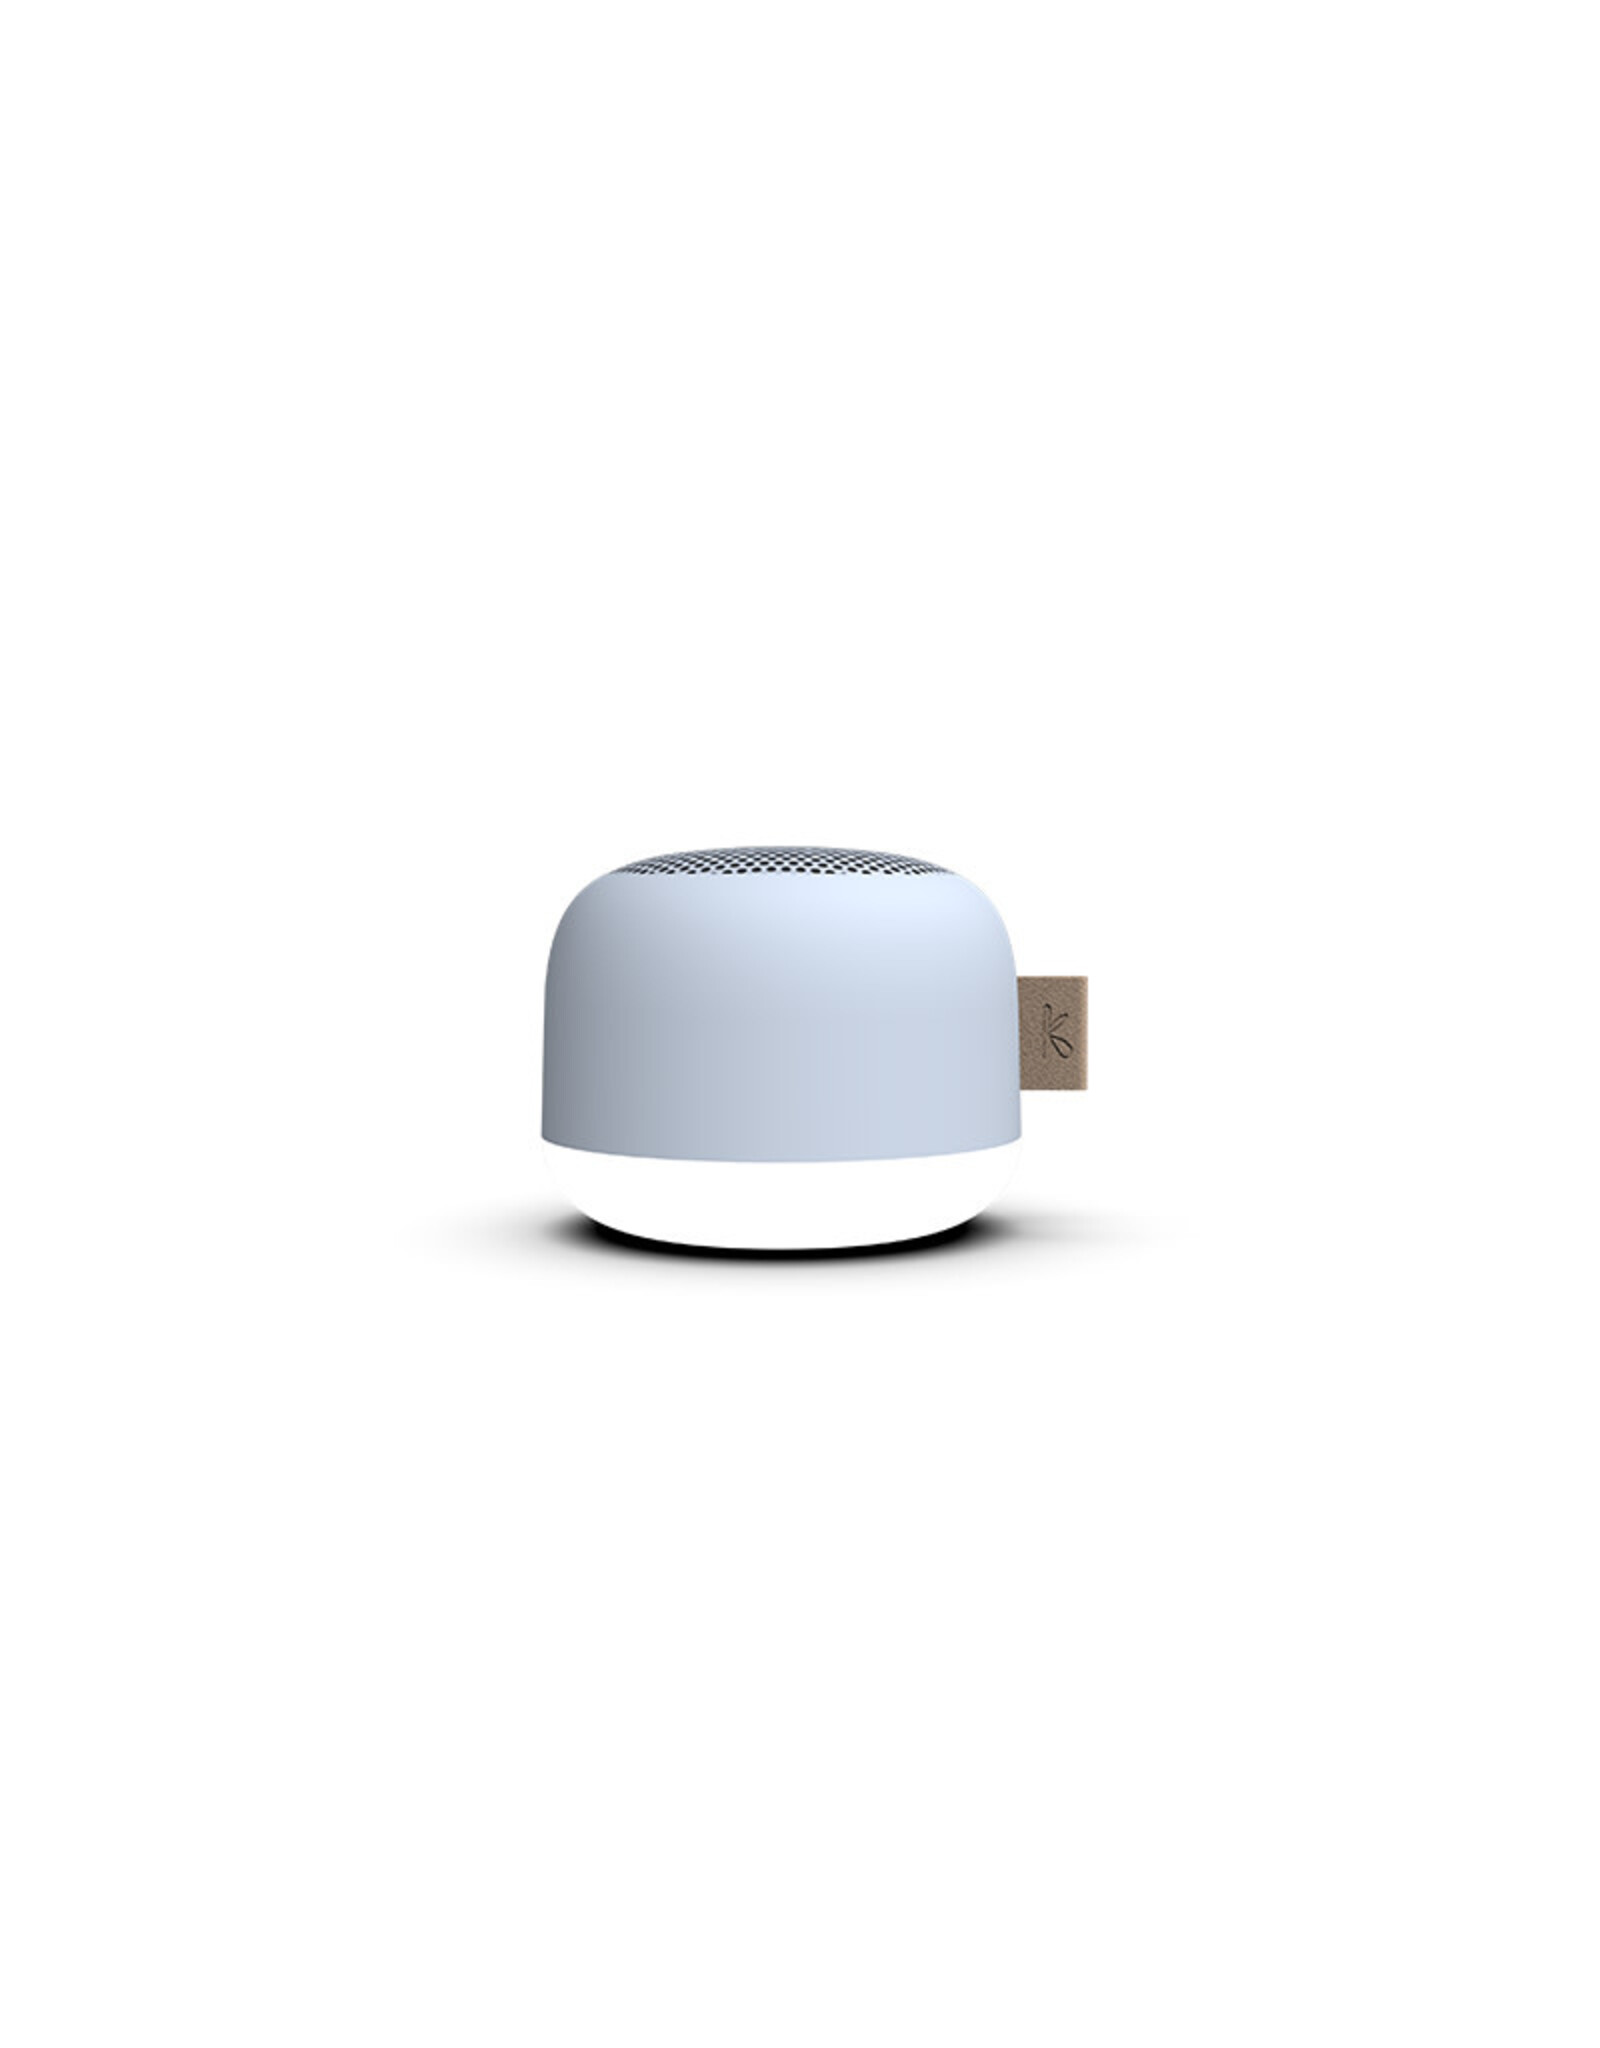 Kreafunk aLight Bluetooth Speaker with Light - Cloudy Blue